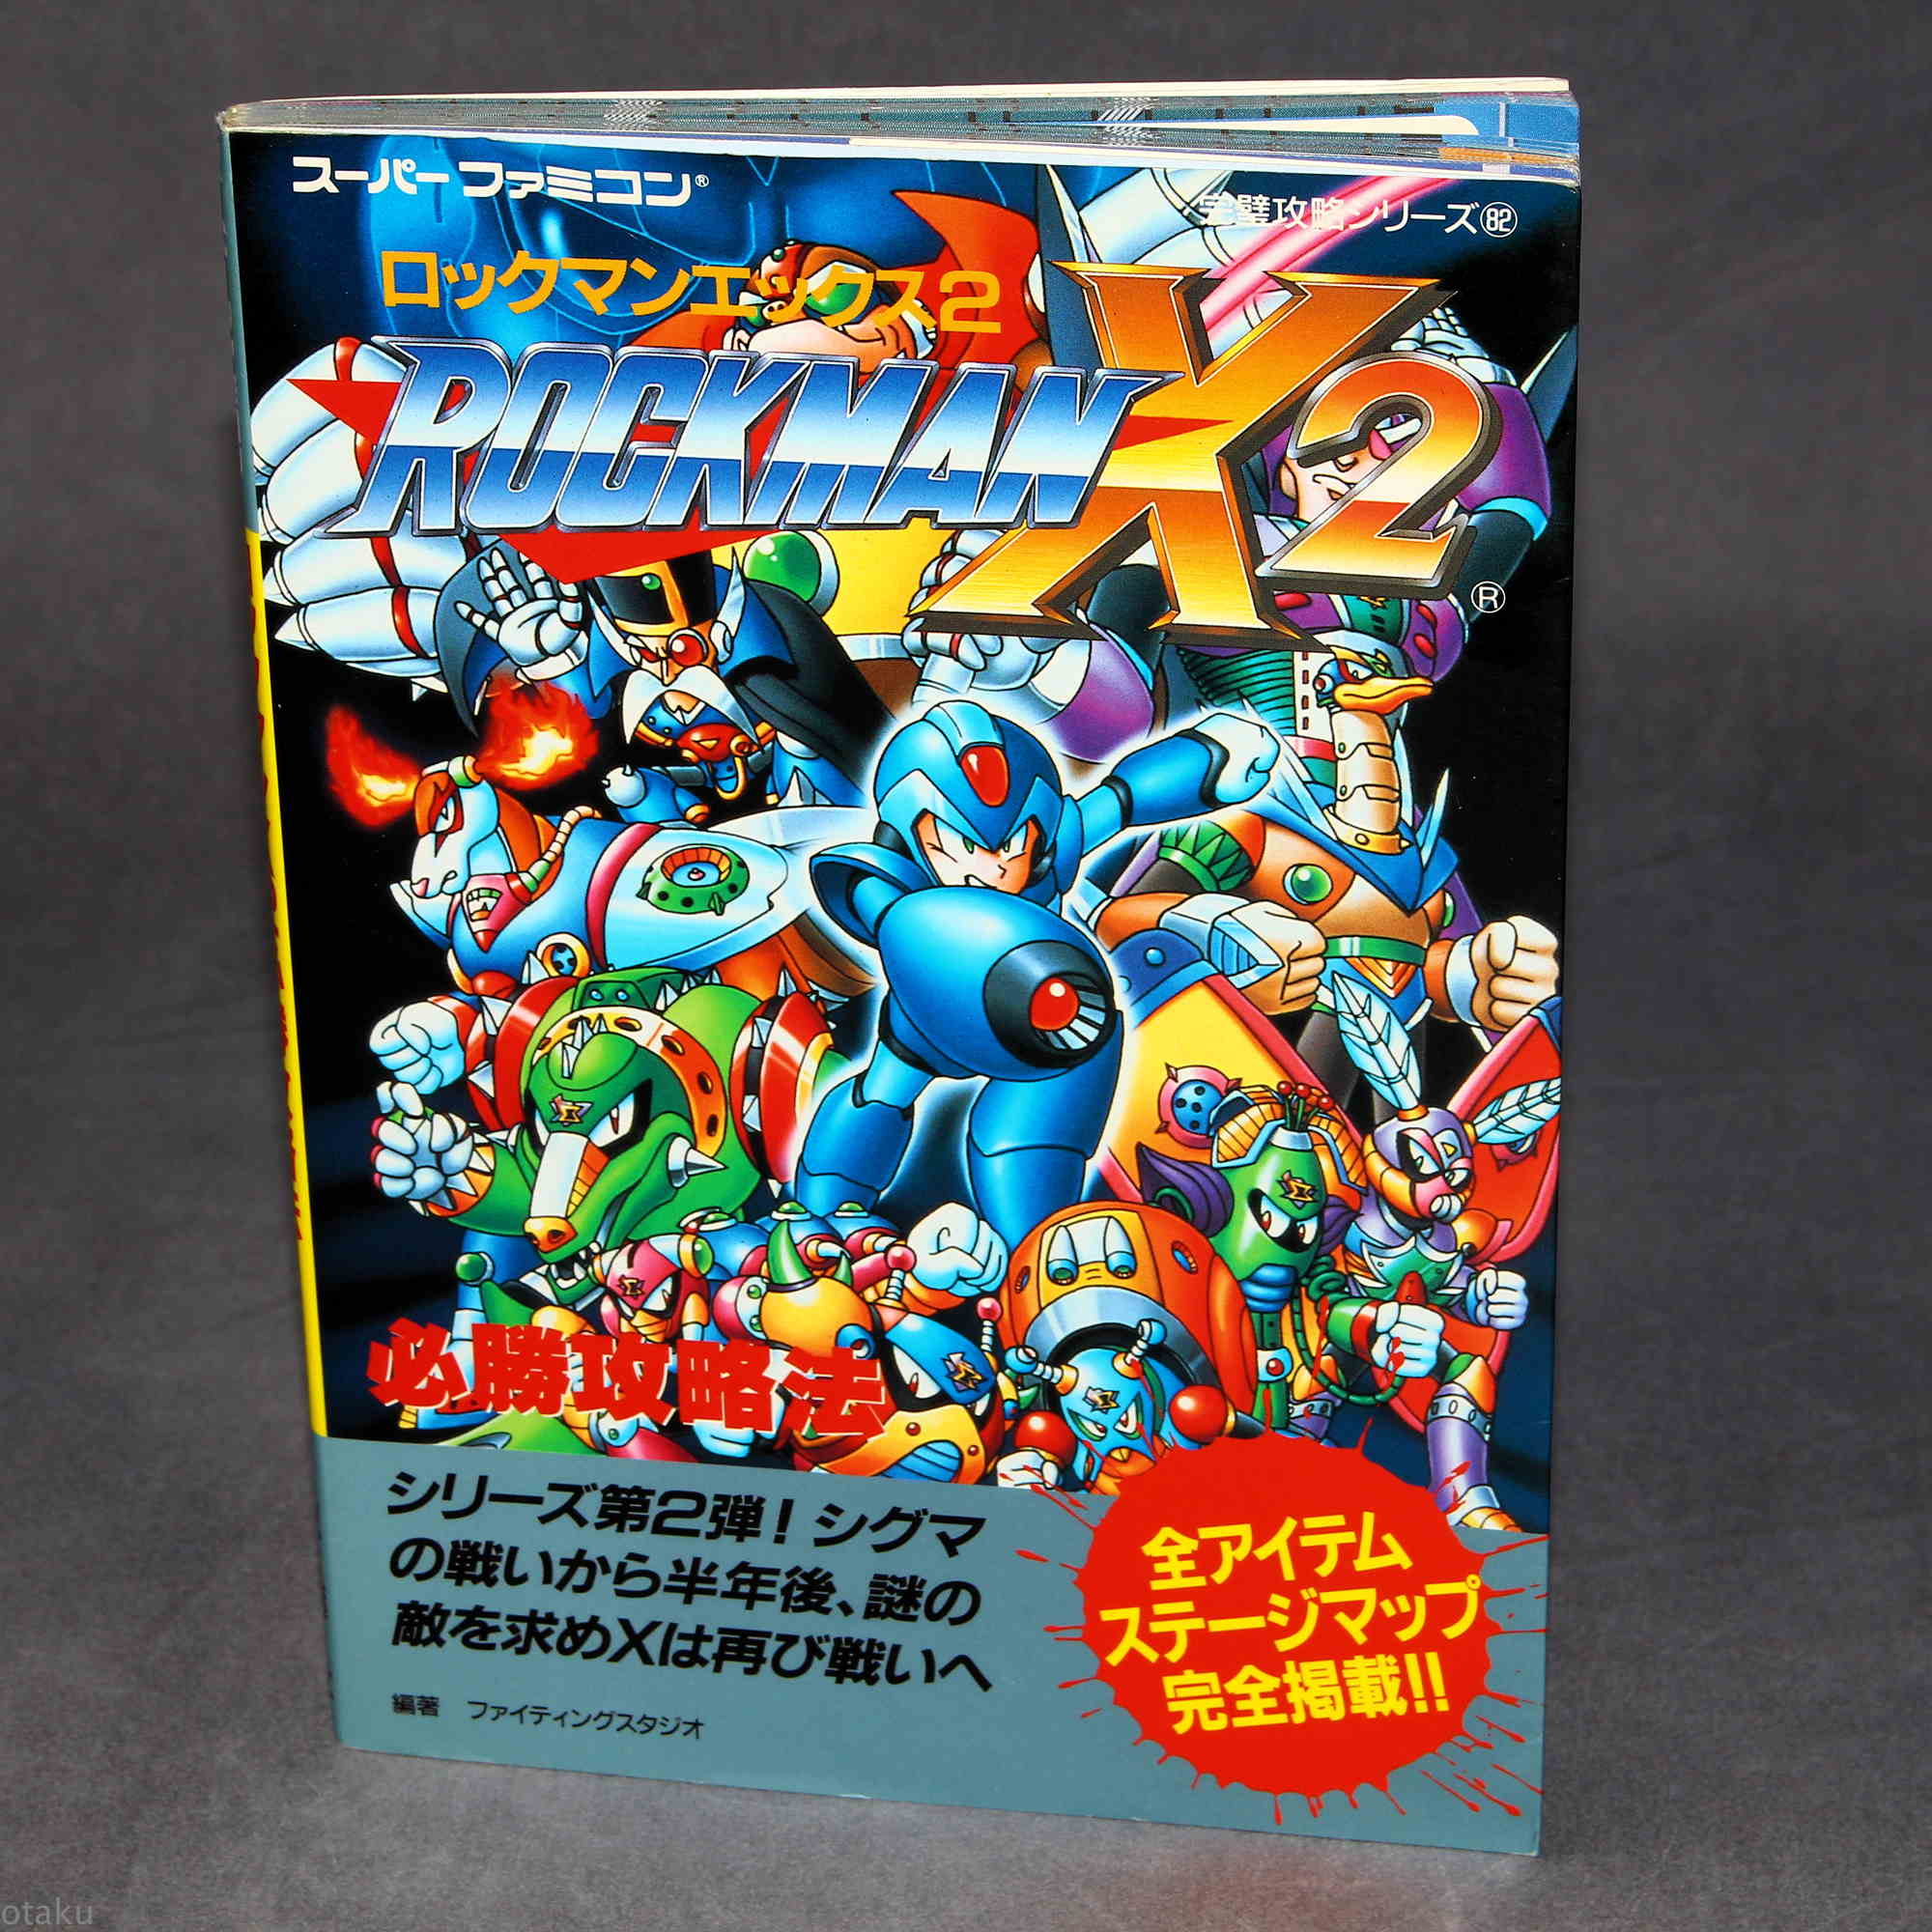 Rockman X2 Super Famicom Snes Game Guide